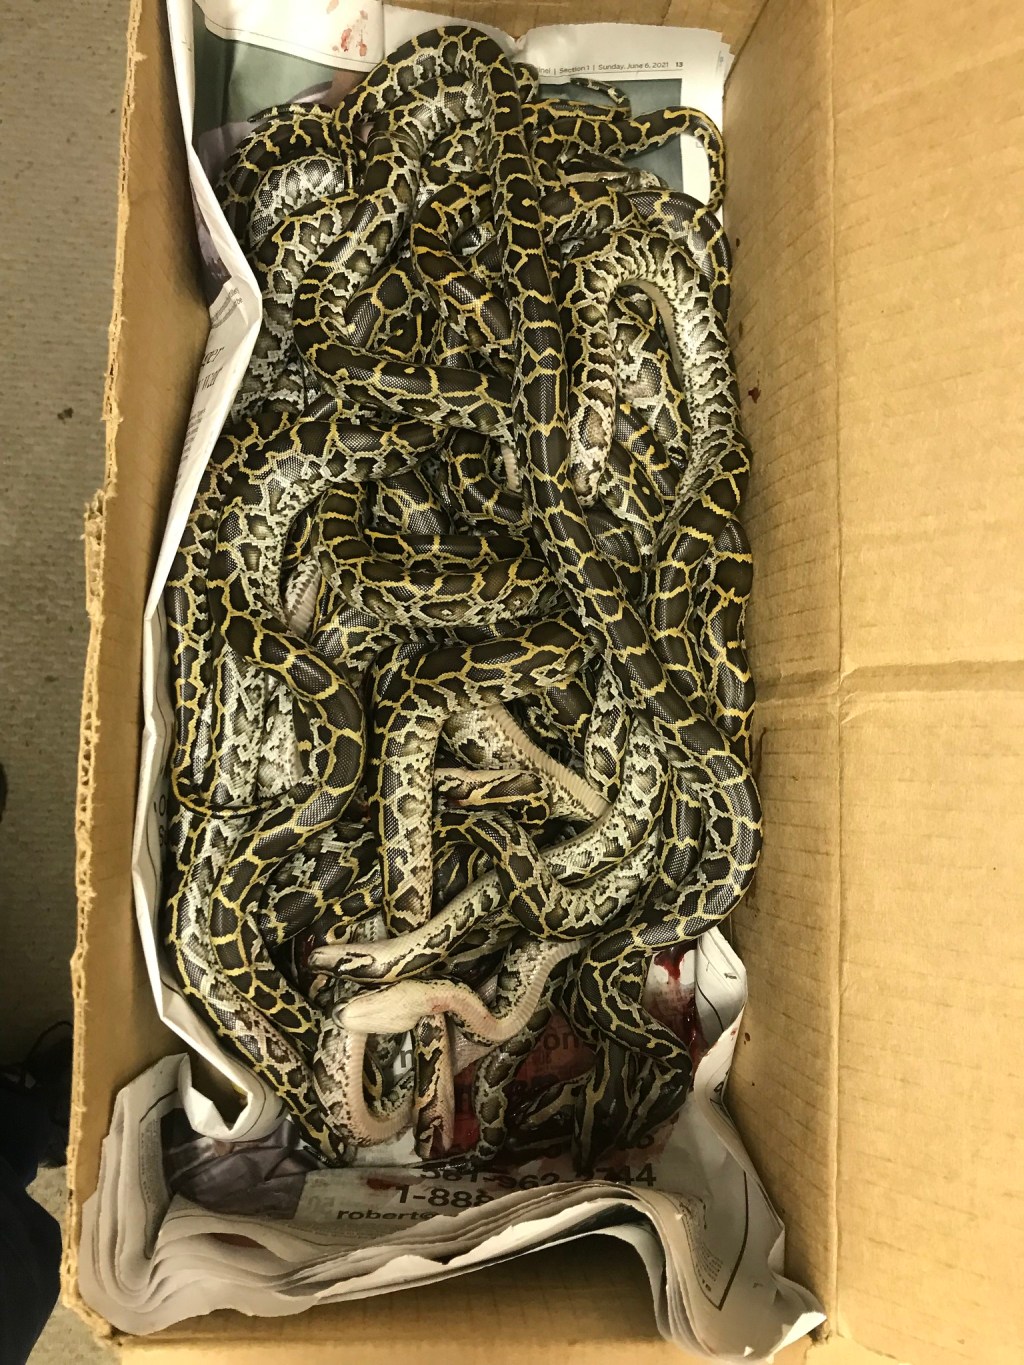 2021 Florida Python Challenge results huge snakes caught